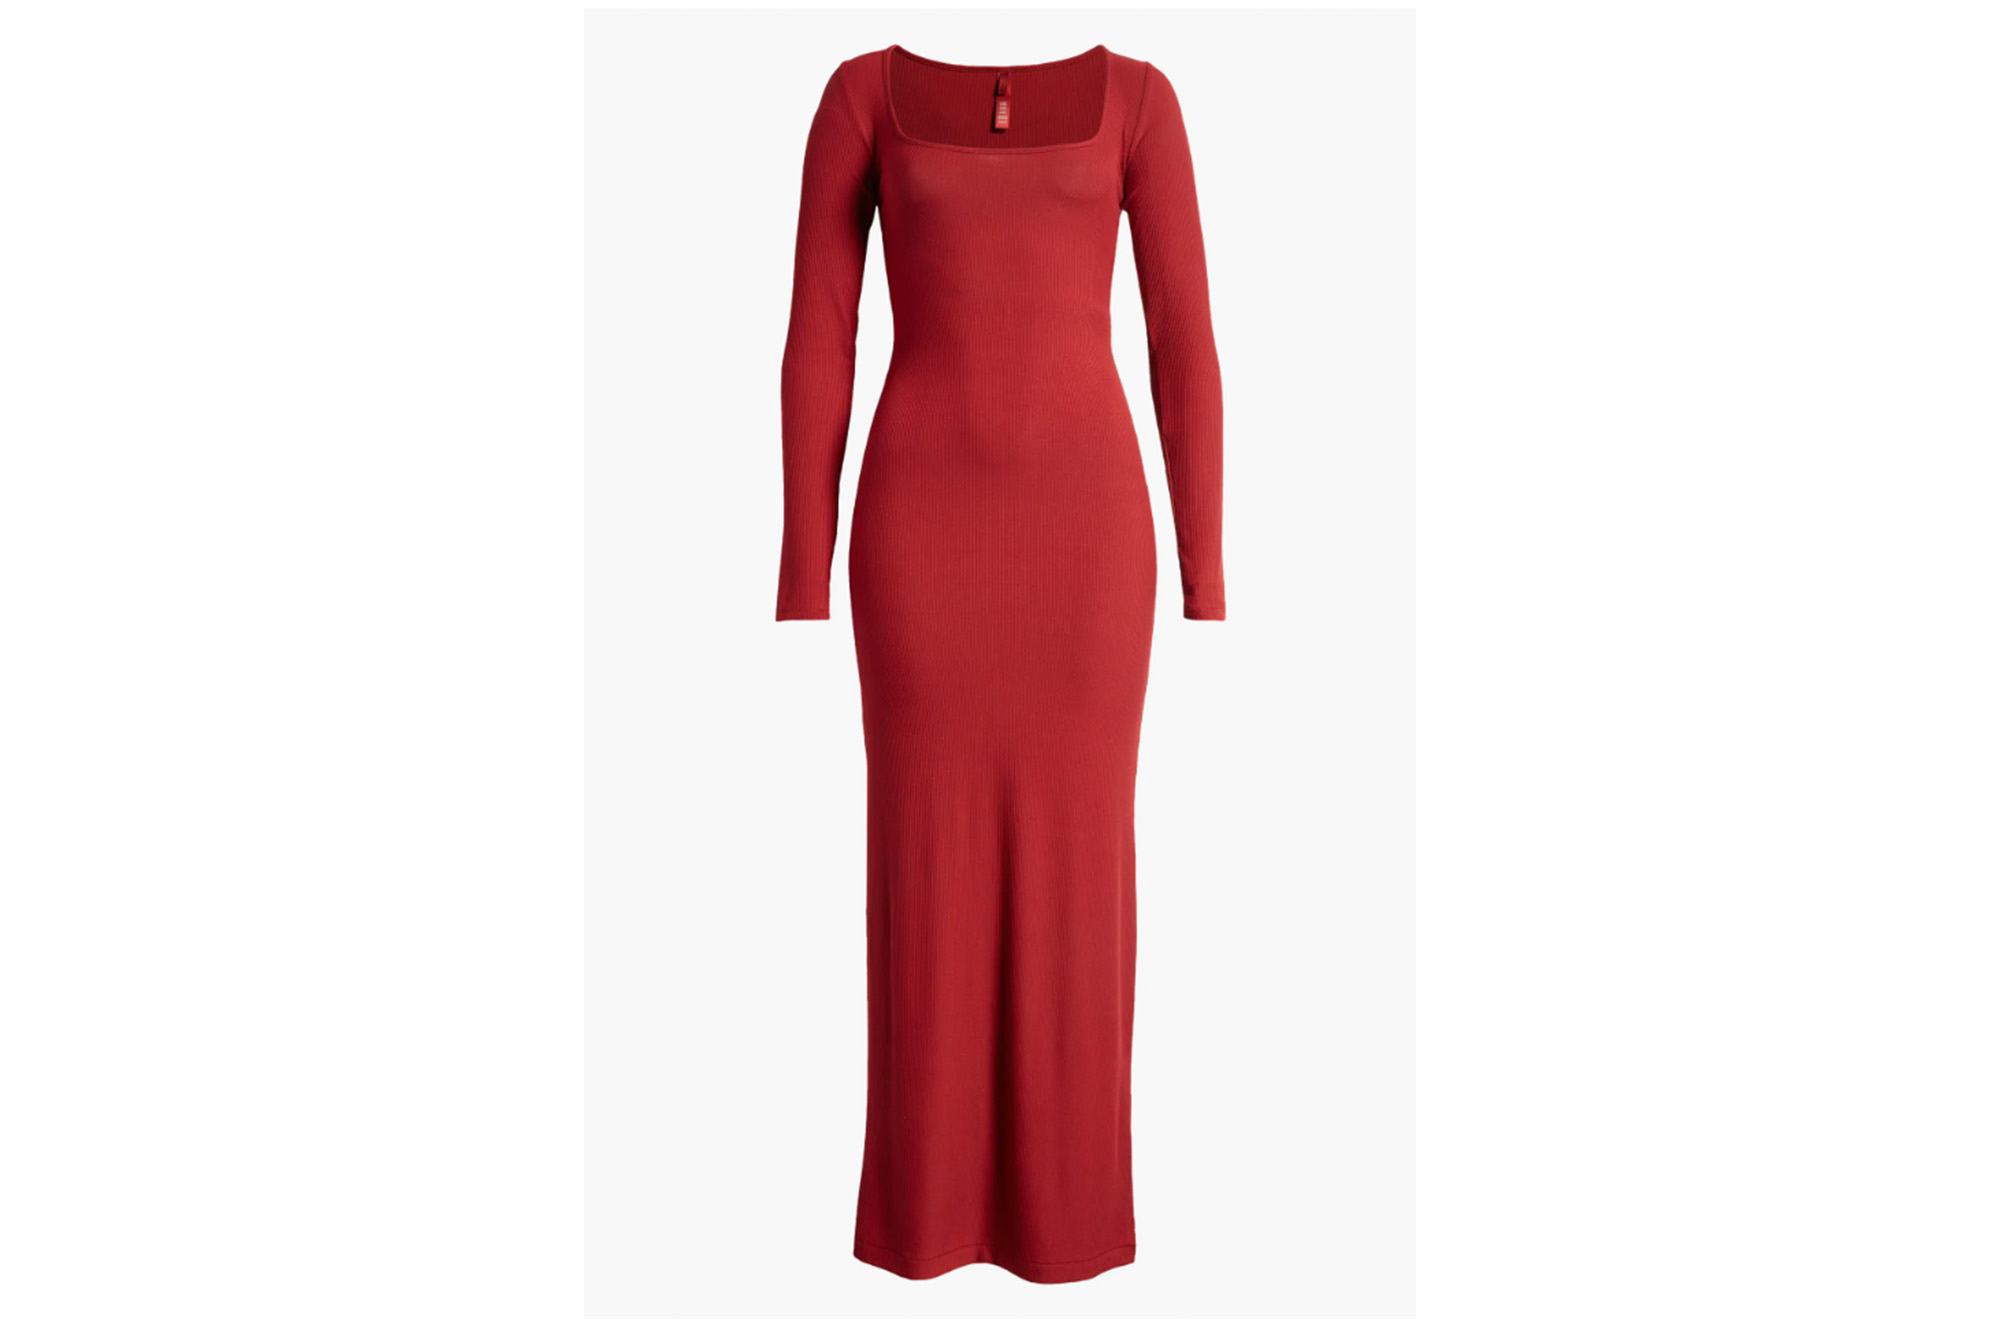 Ein rotes Kleid